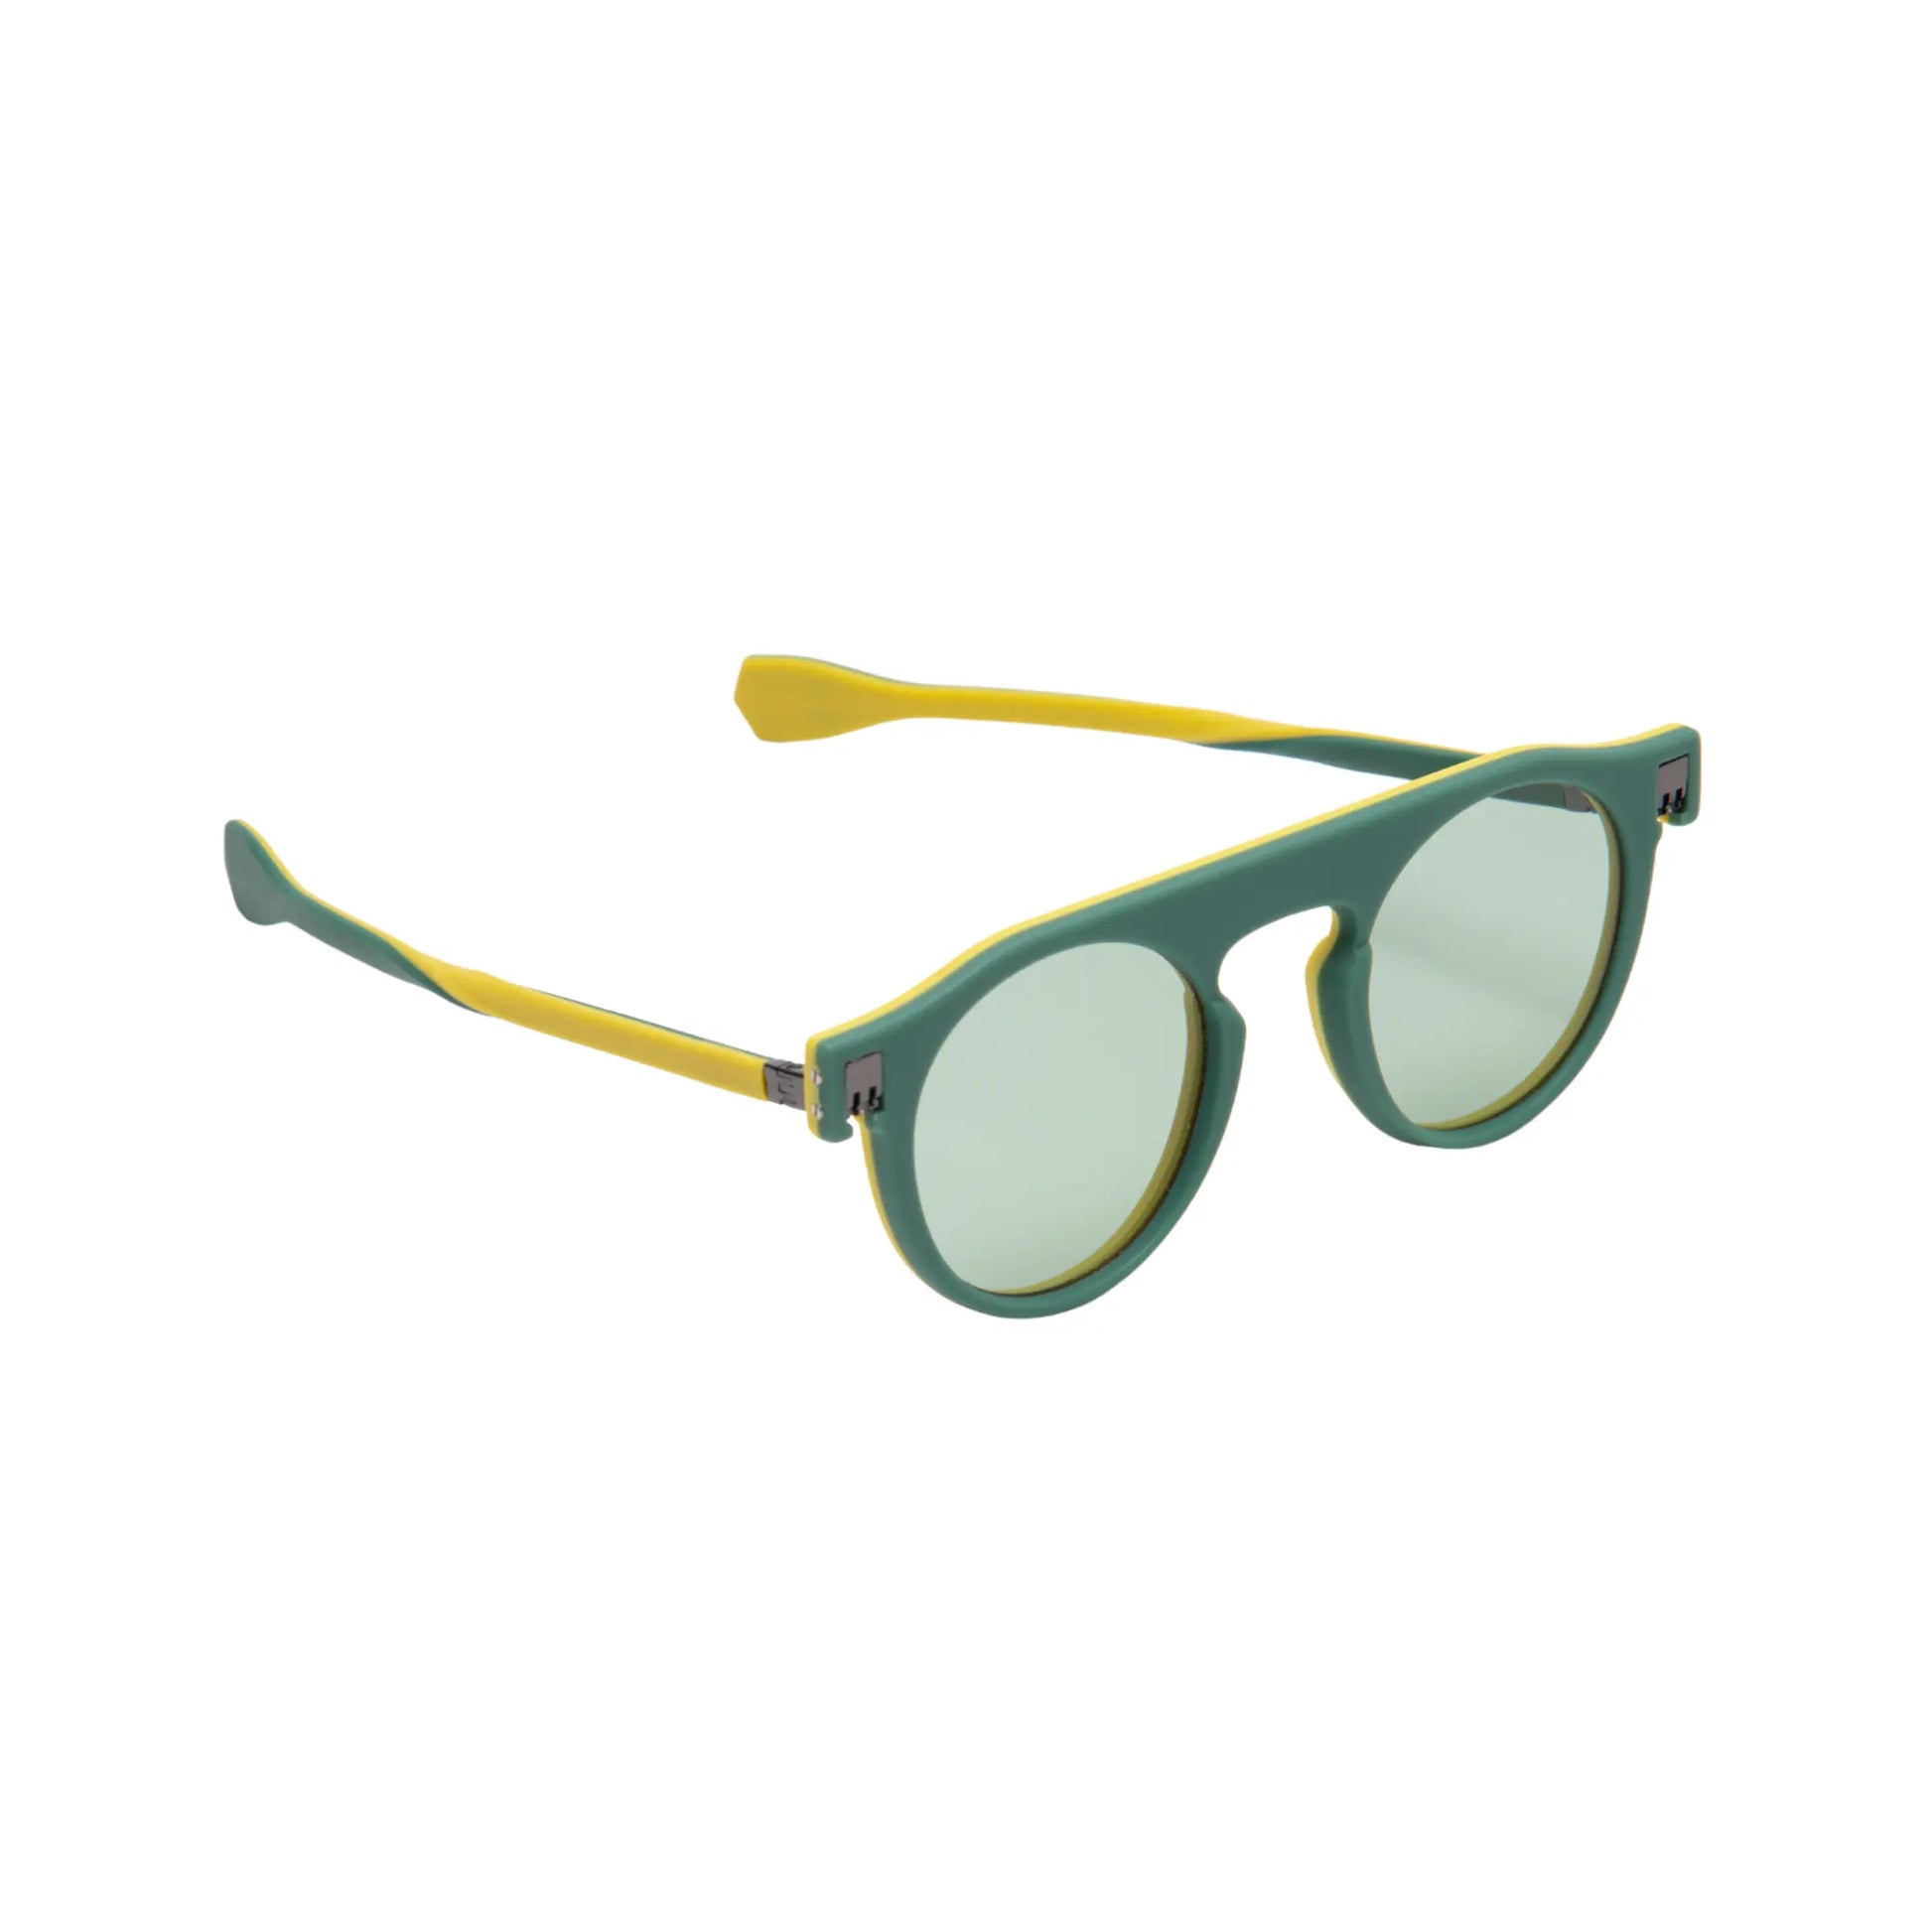 Reverso sunglasses green & yellow reversible & ultra light side view